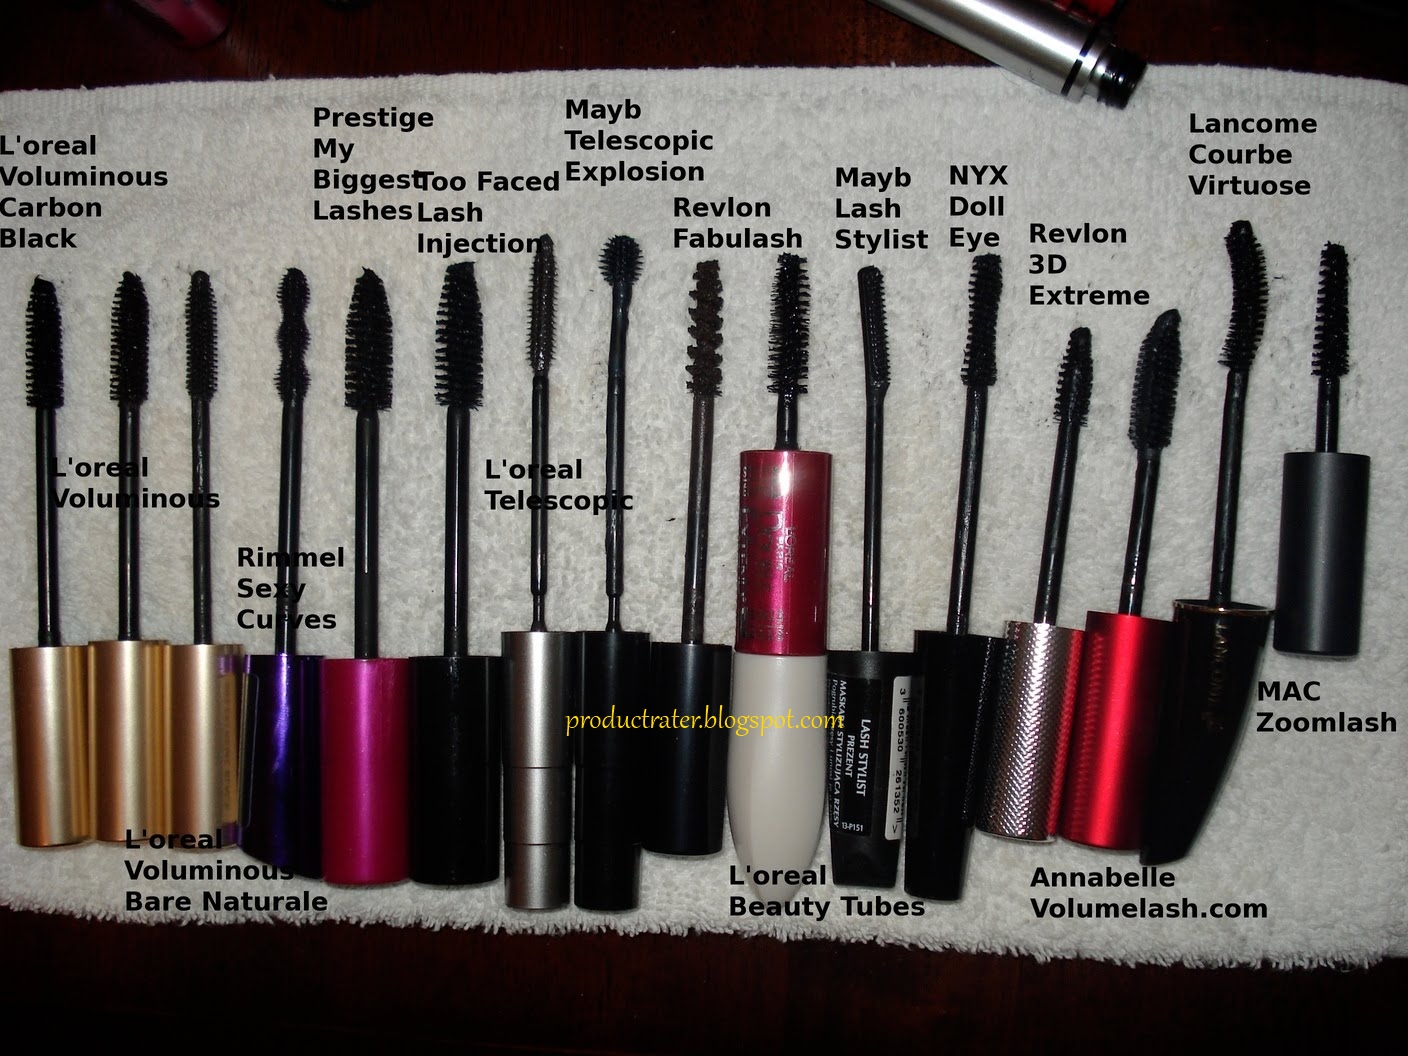 Mascara brush types